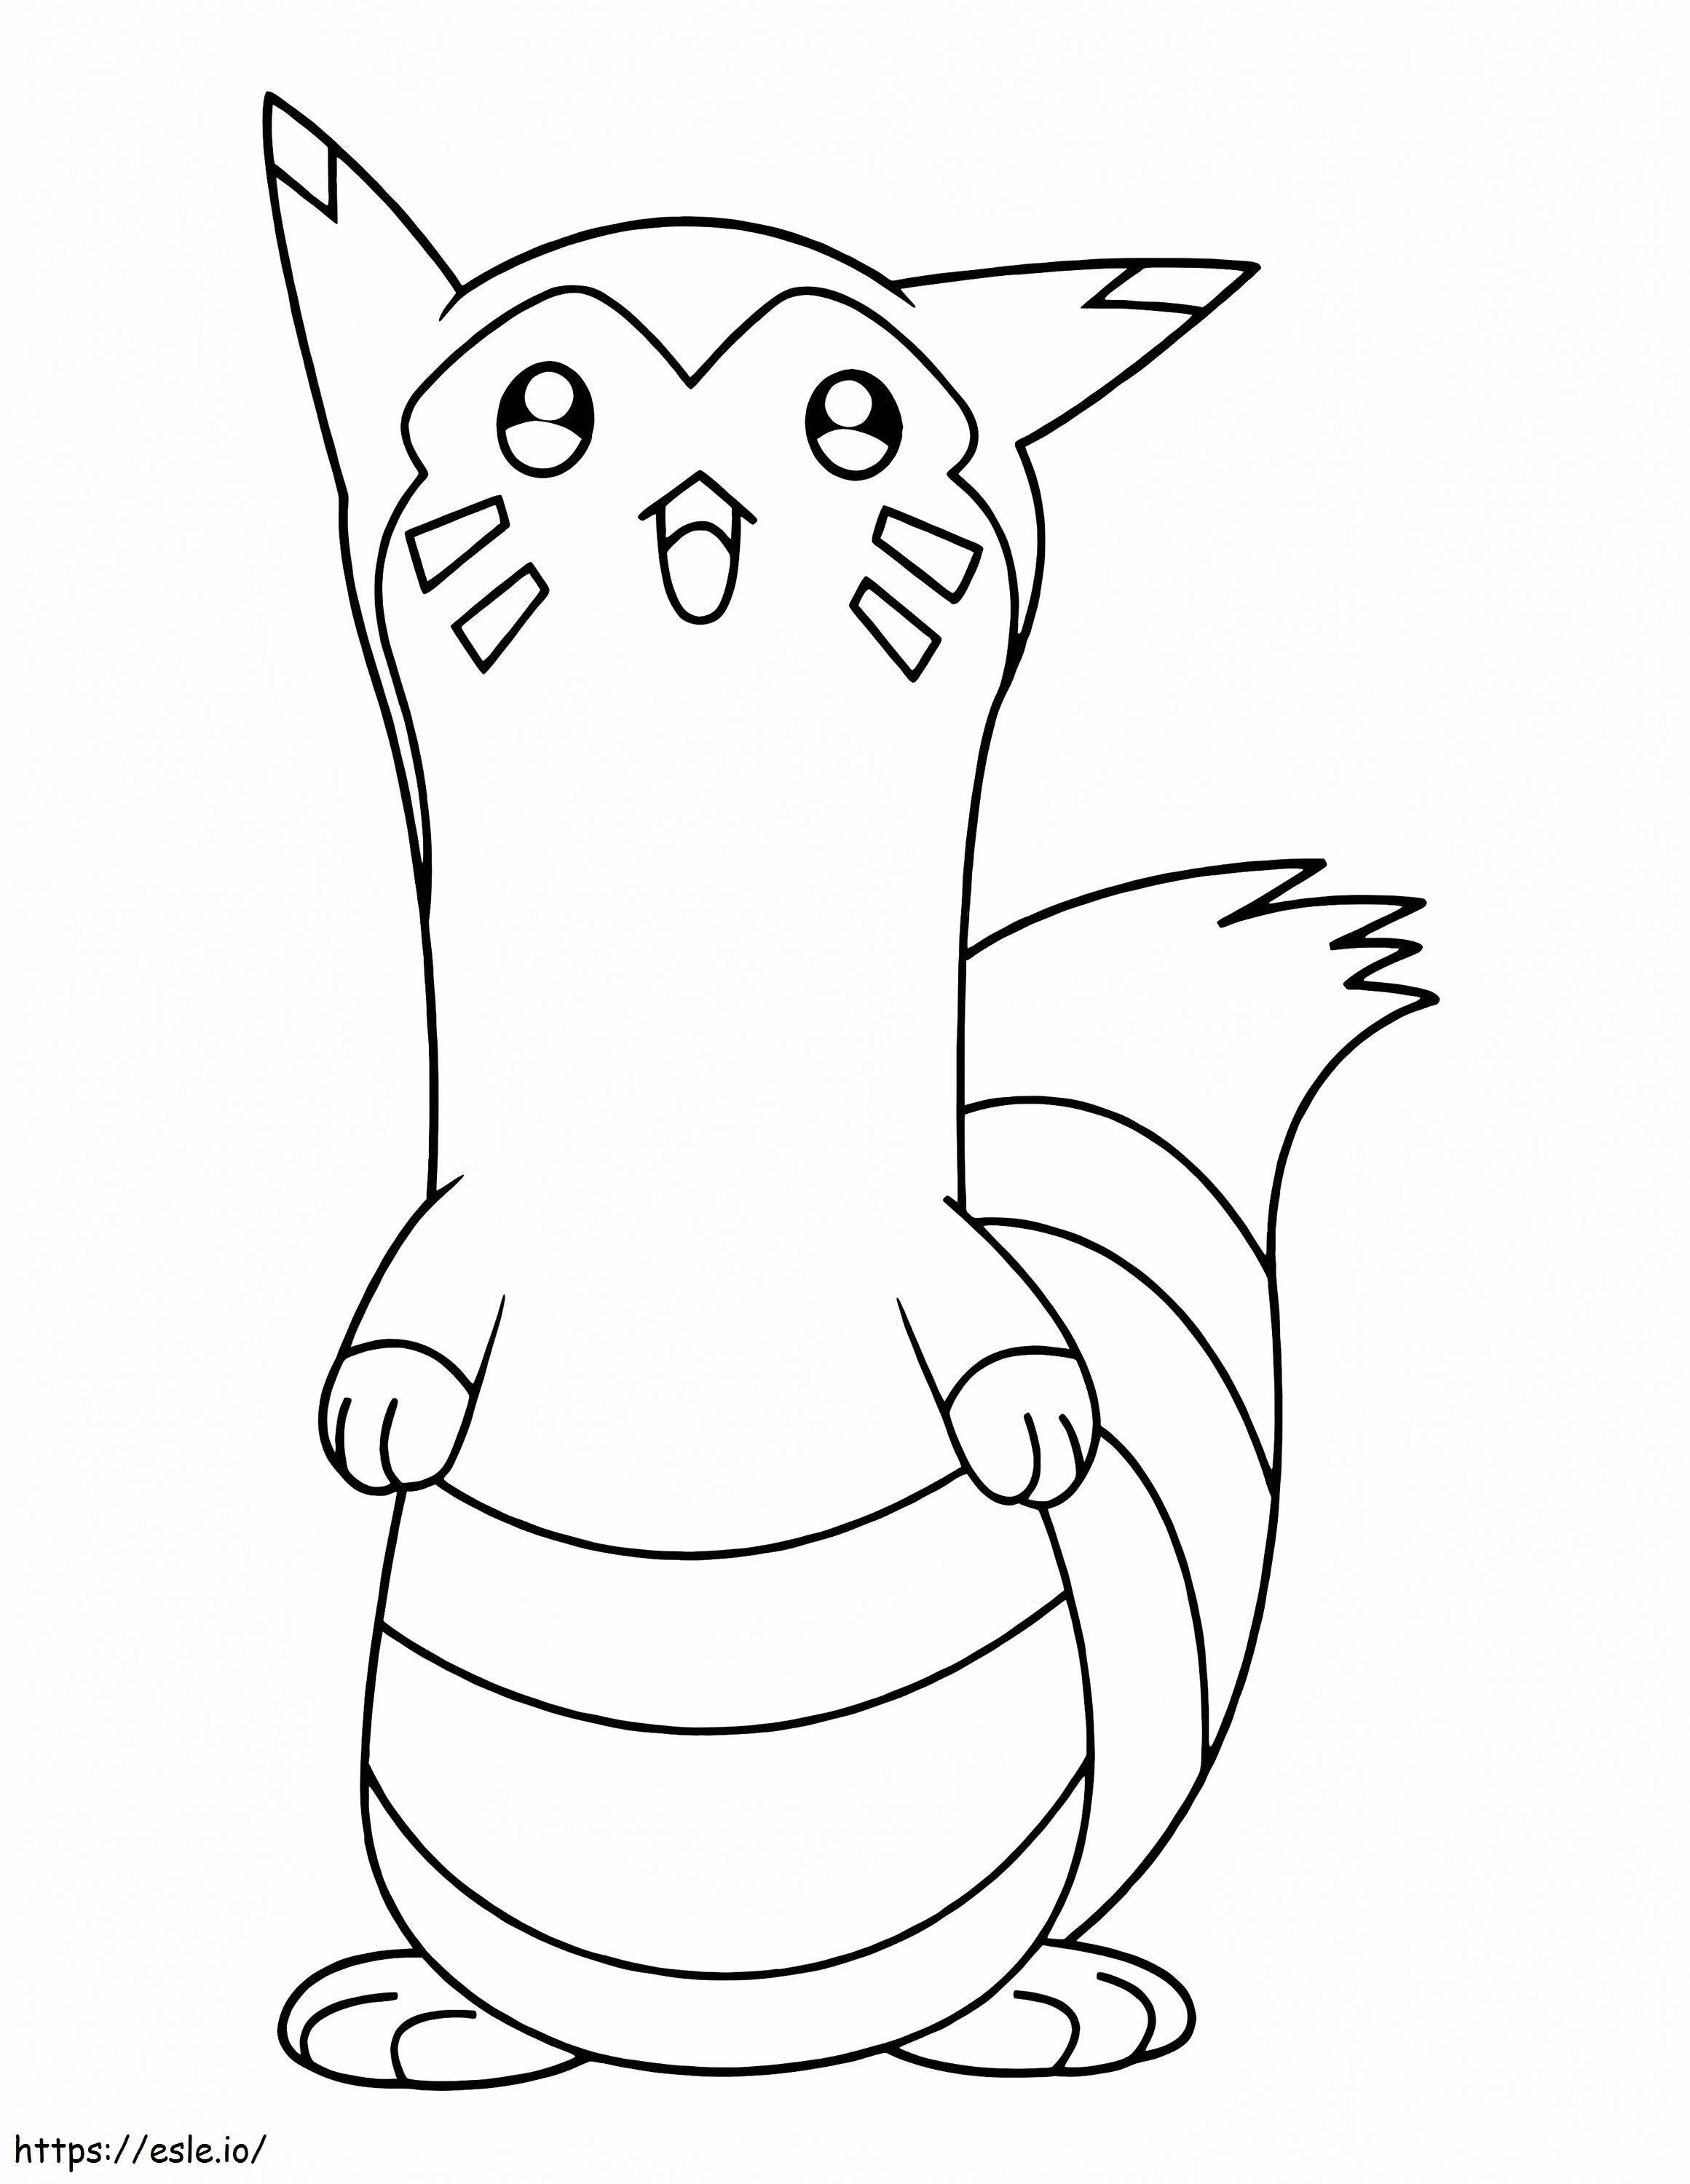 Pokemon Furret coloring page